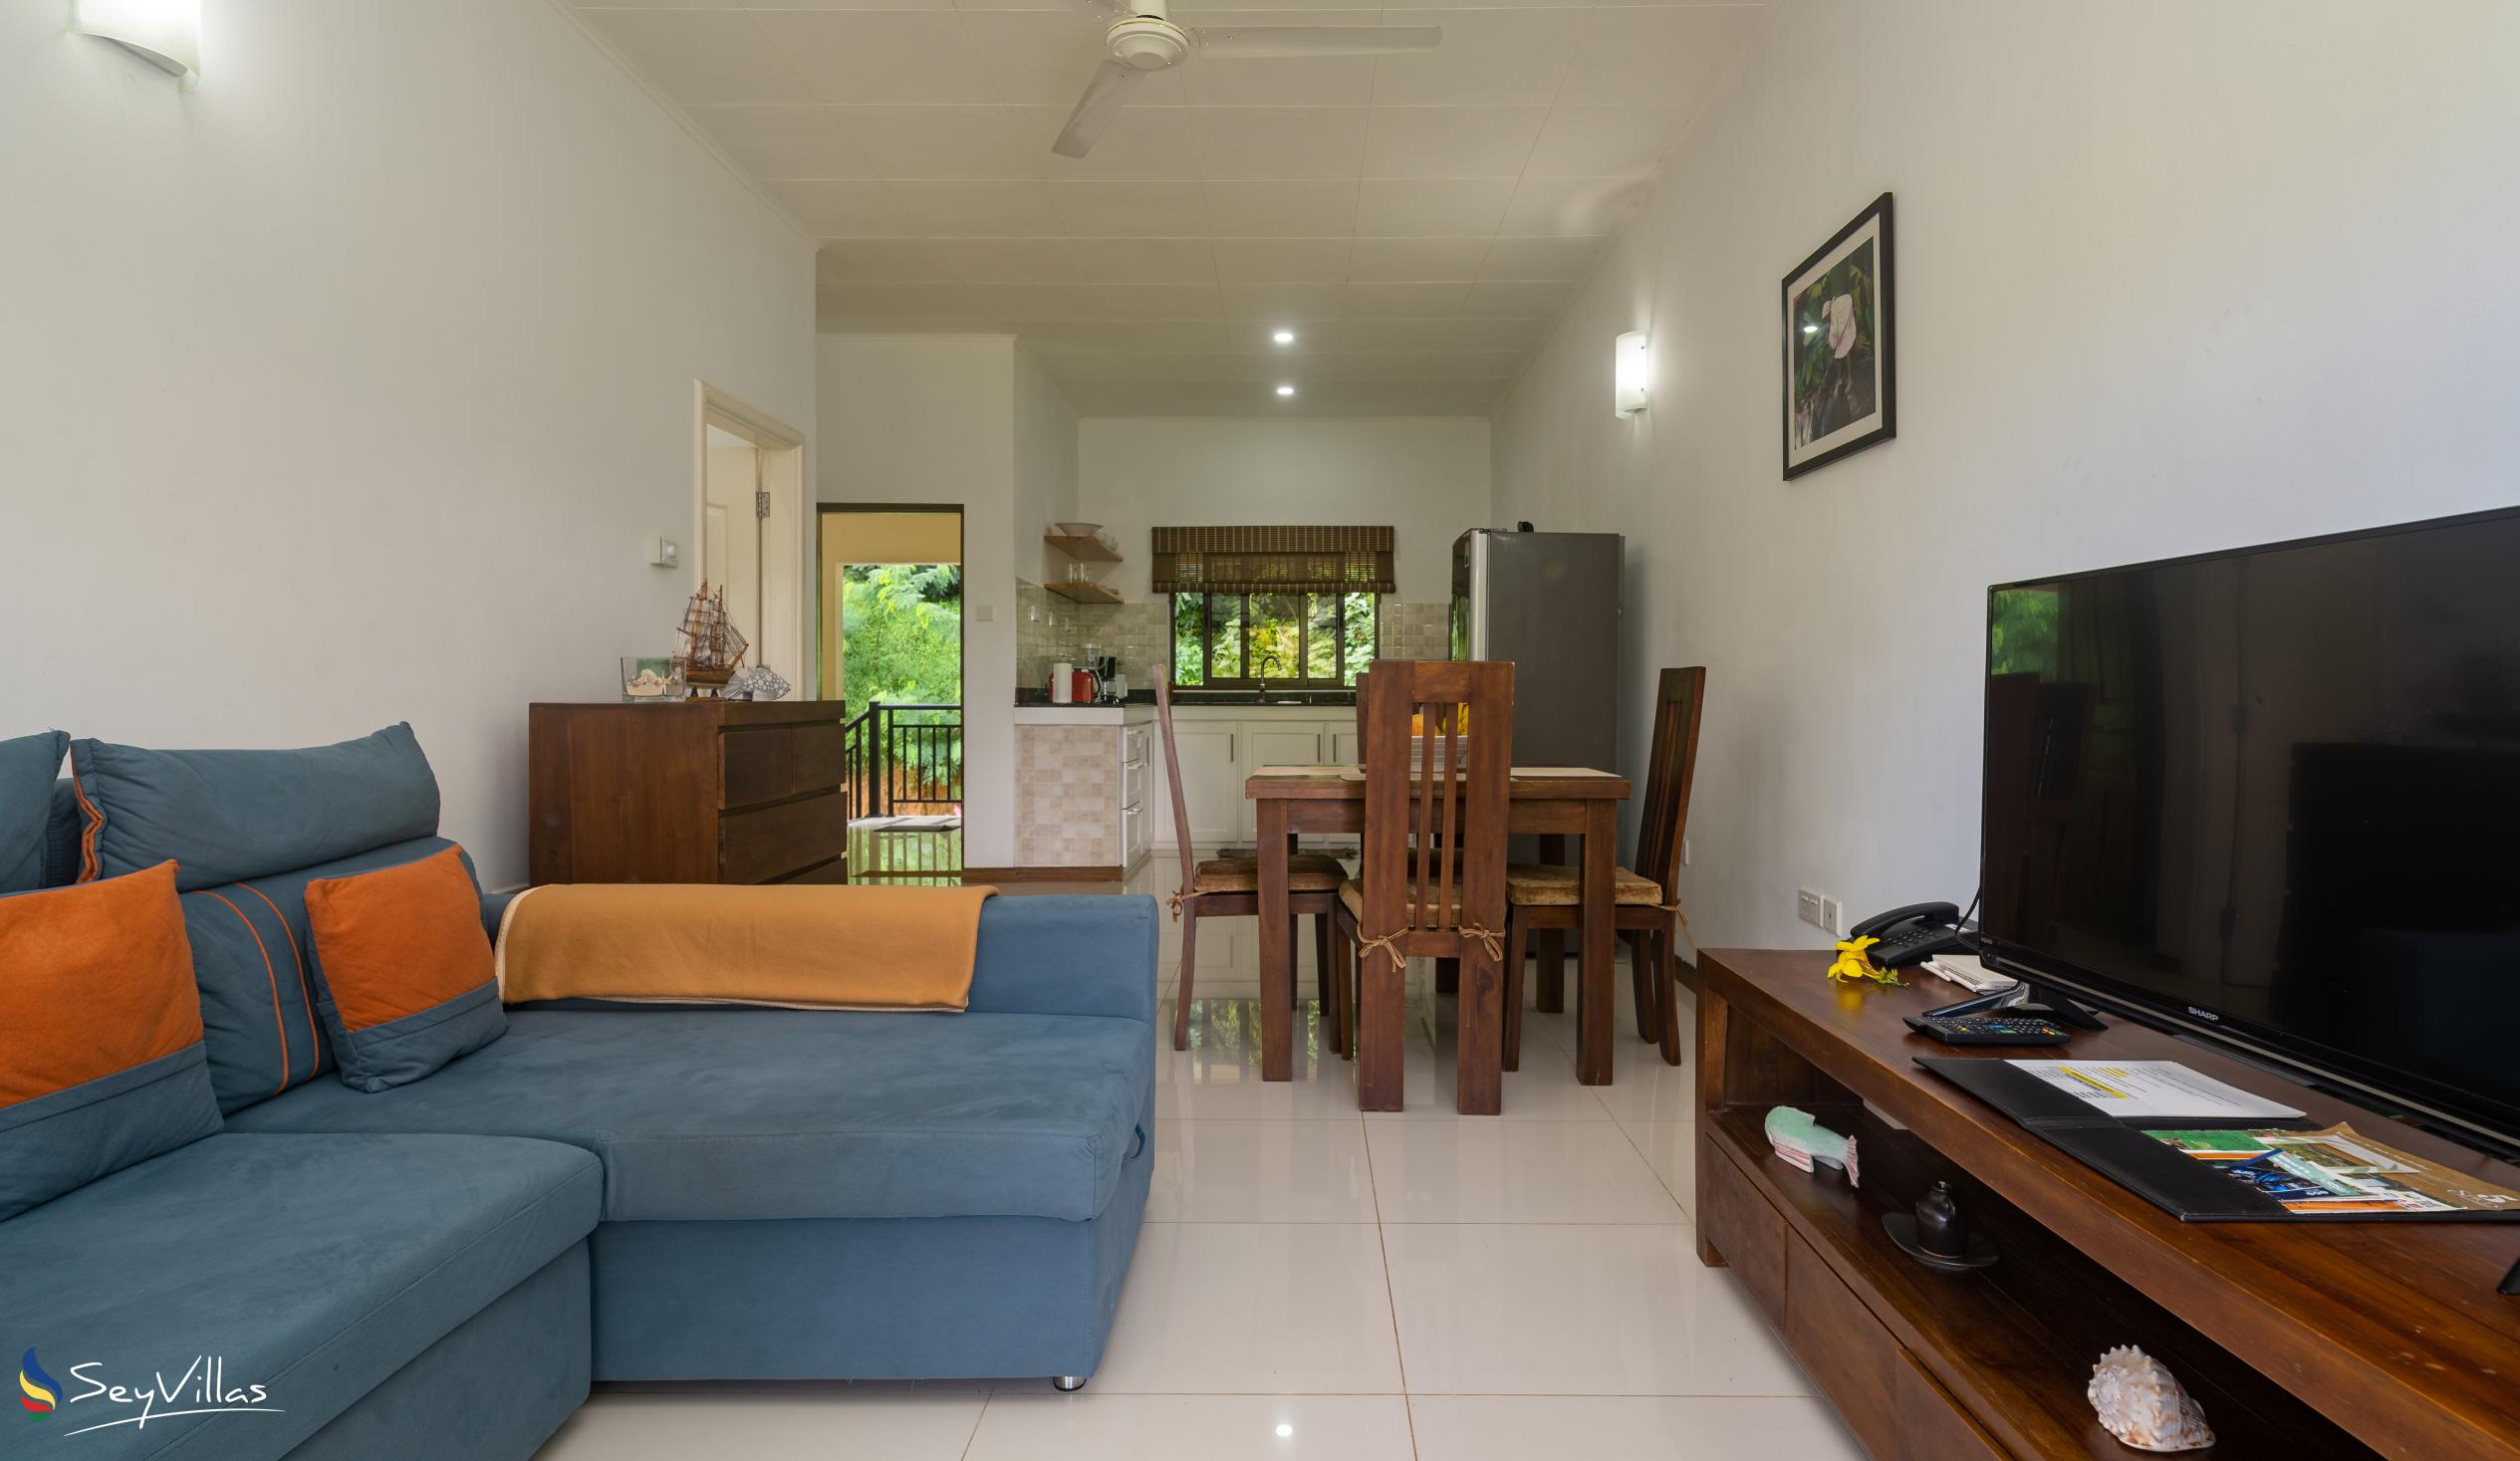 Photo 71: Kanasuk Self Catering Apartments - 1-Bedroom Apartment Tamarin - Mahé (Seychelles)